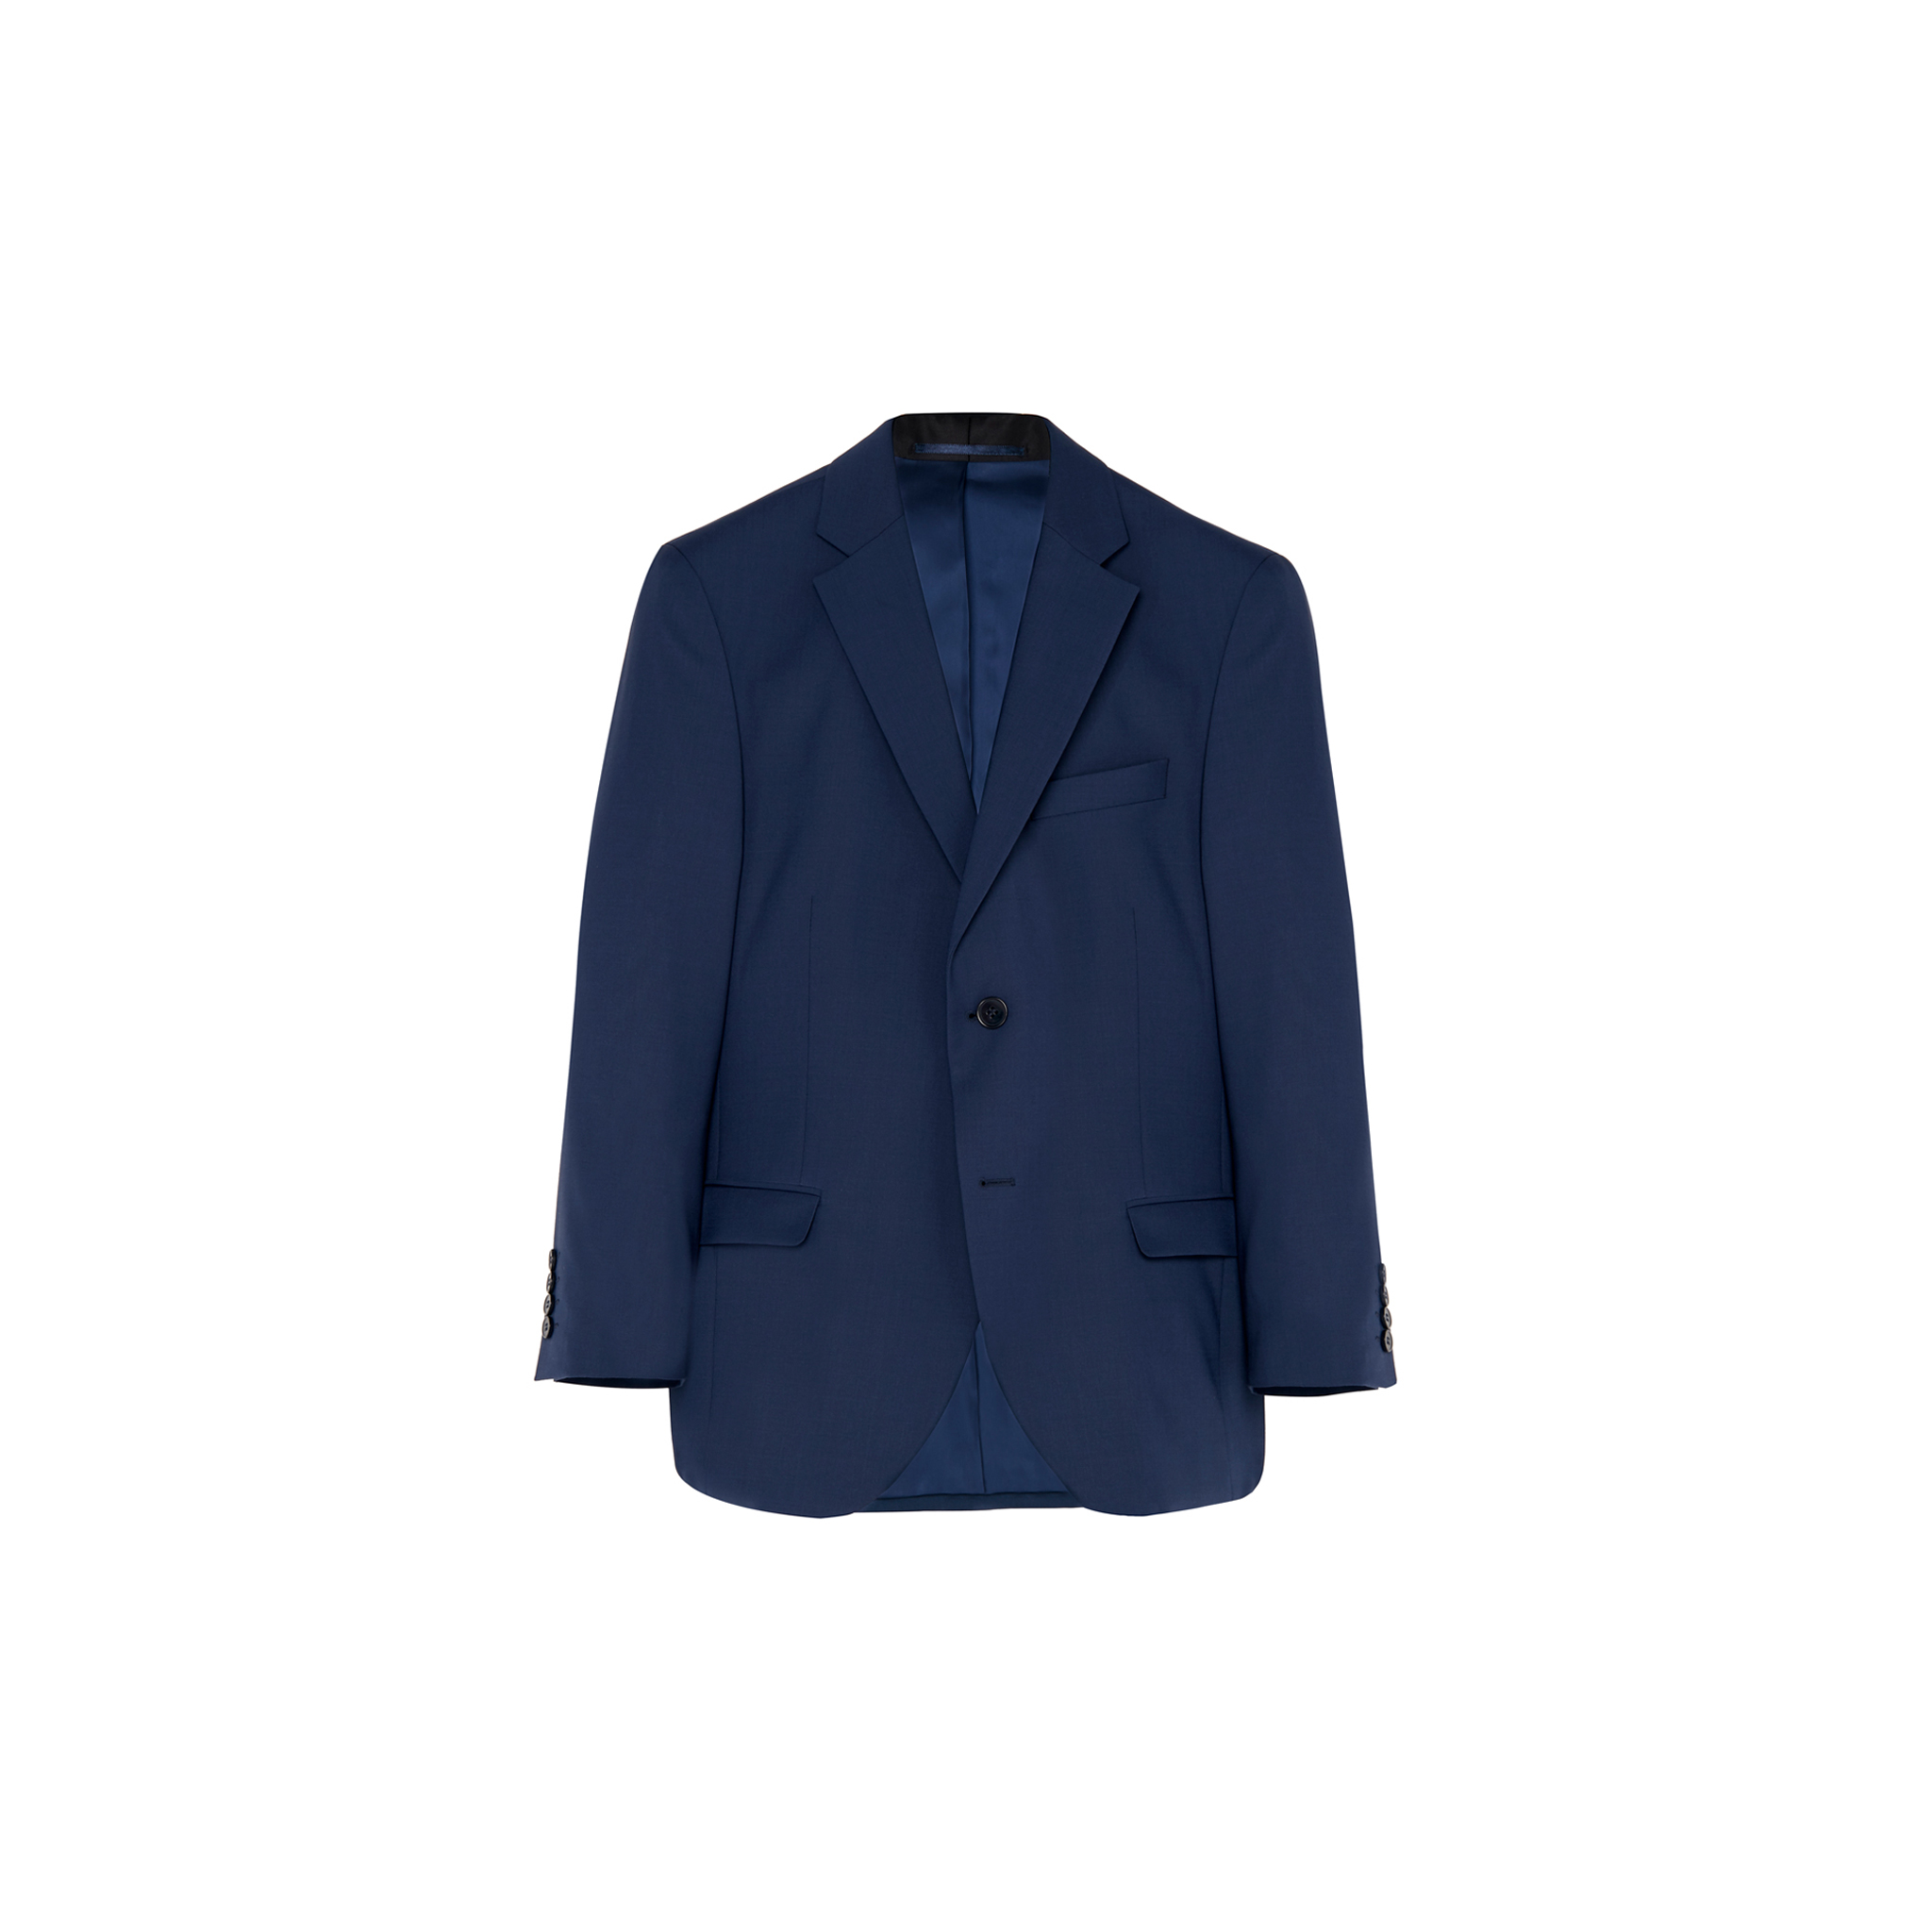 China Blue Boys Plus Size Sturdy Fit Wool Blend Super Luxury Suit ...